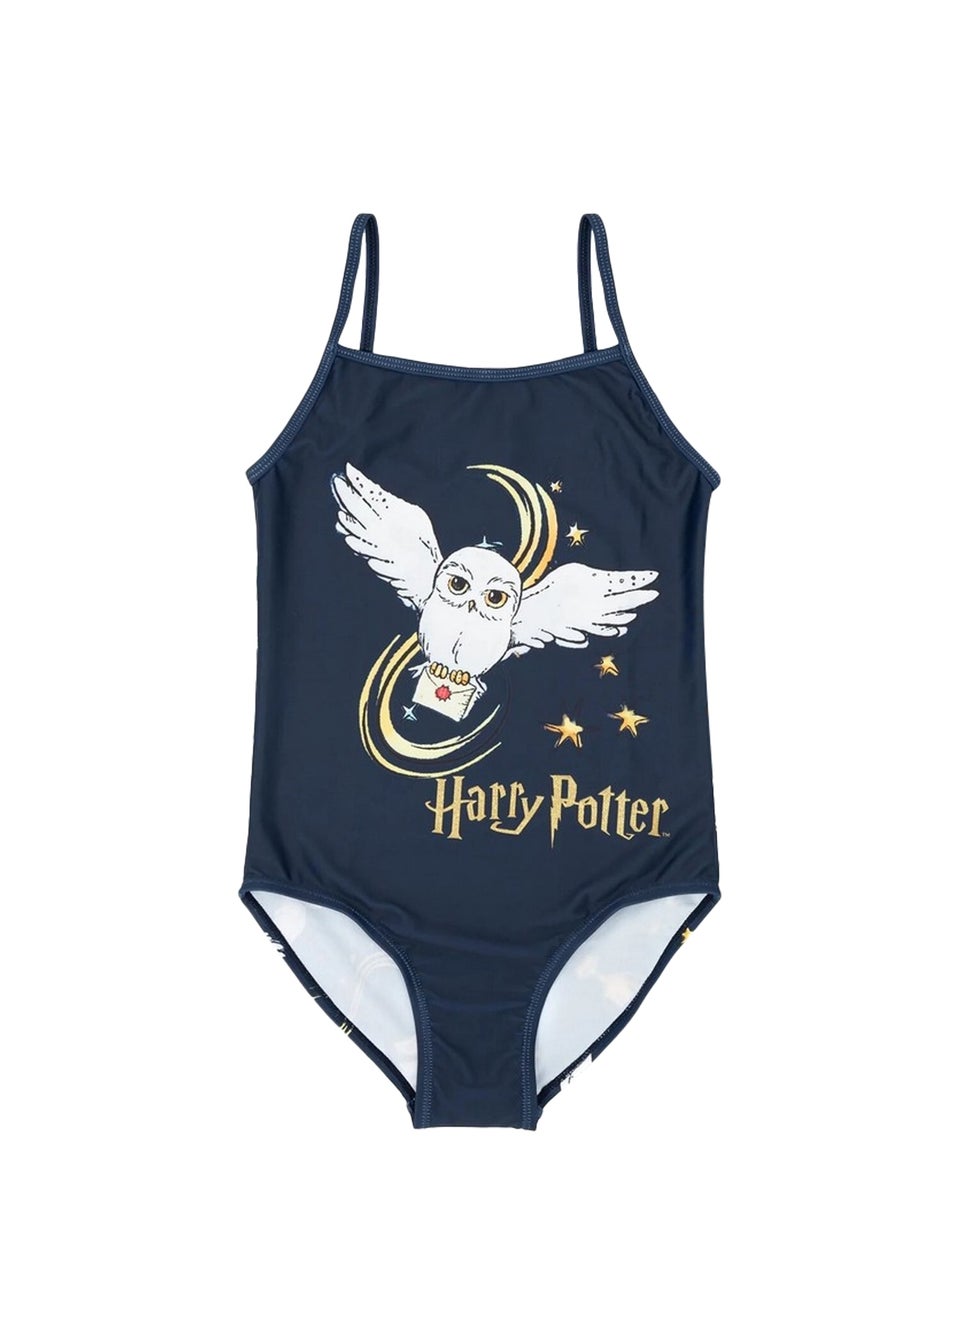 Harry Potter Kids Navy Hogwarts One Piece Swimsuit (5-14yrs)